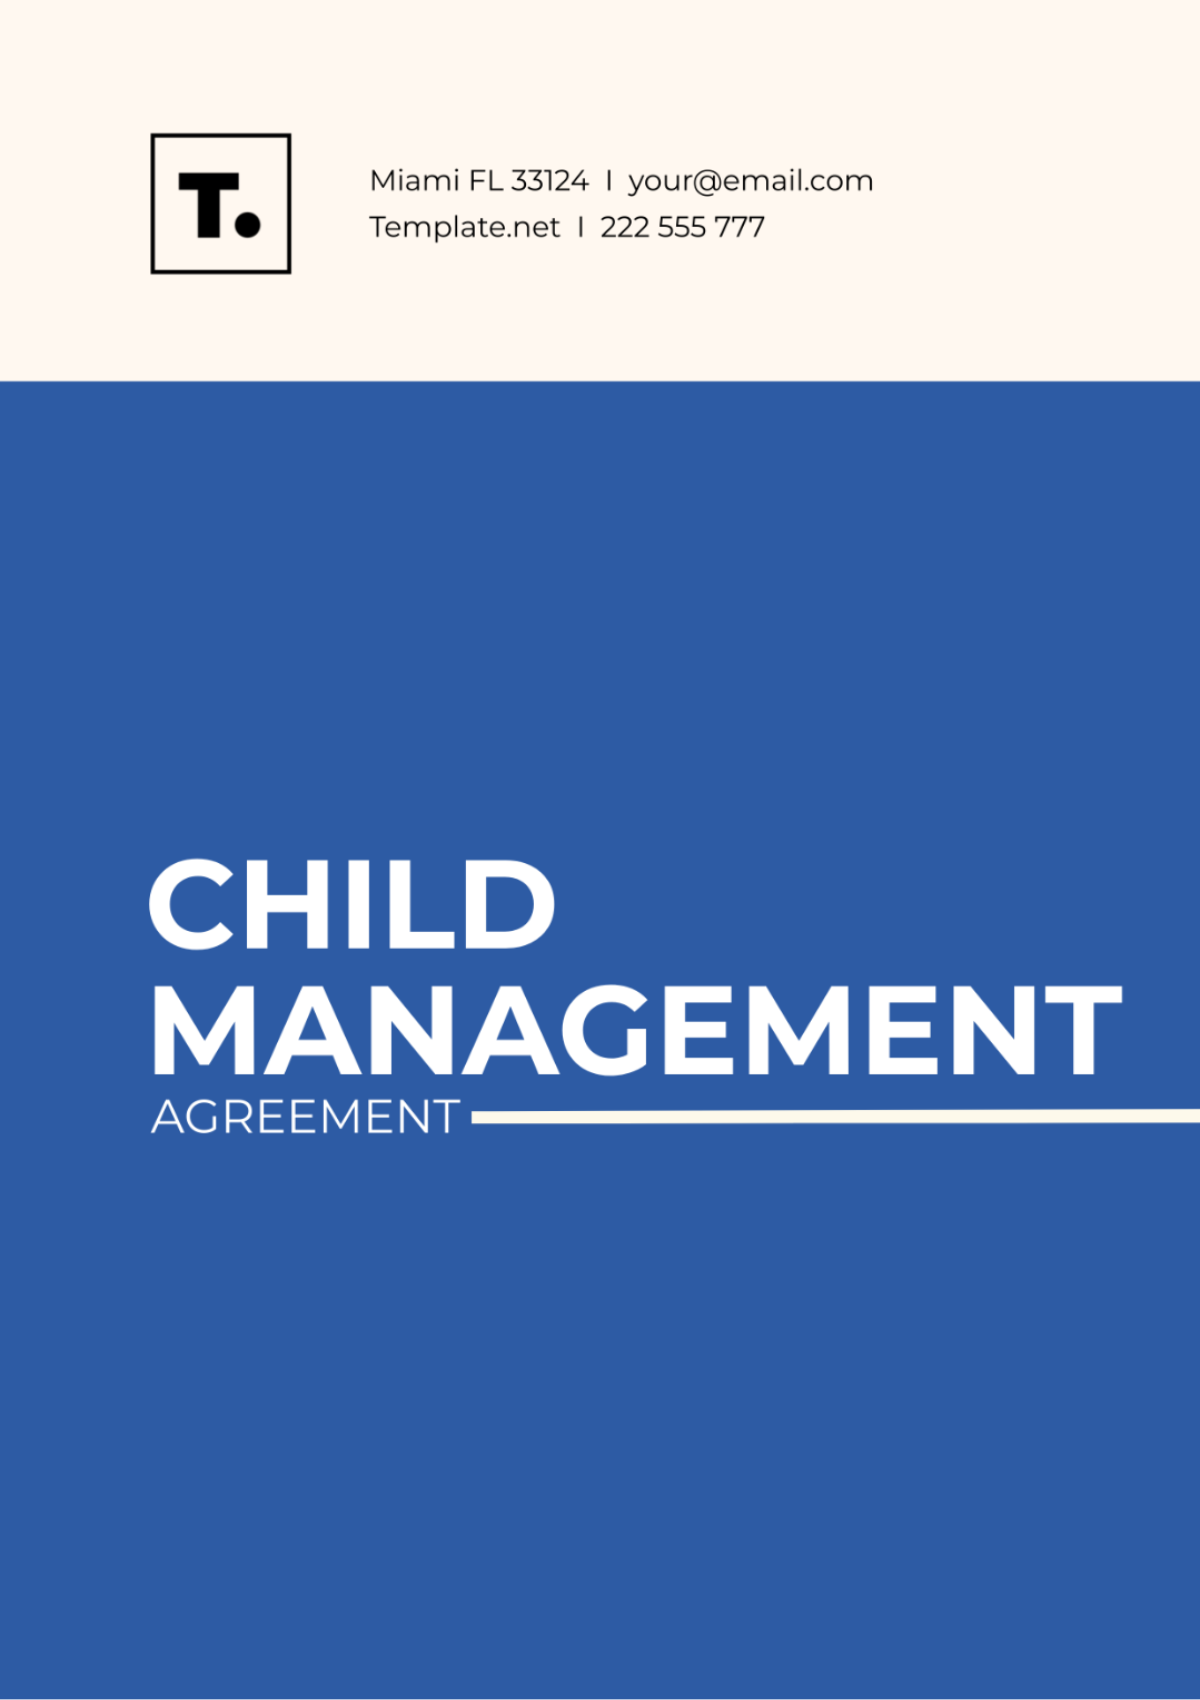 Child Maintenance Agreement Template